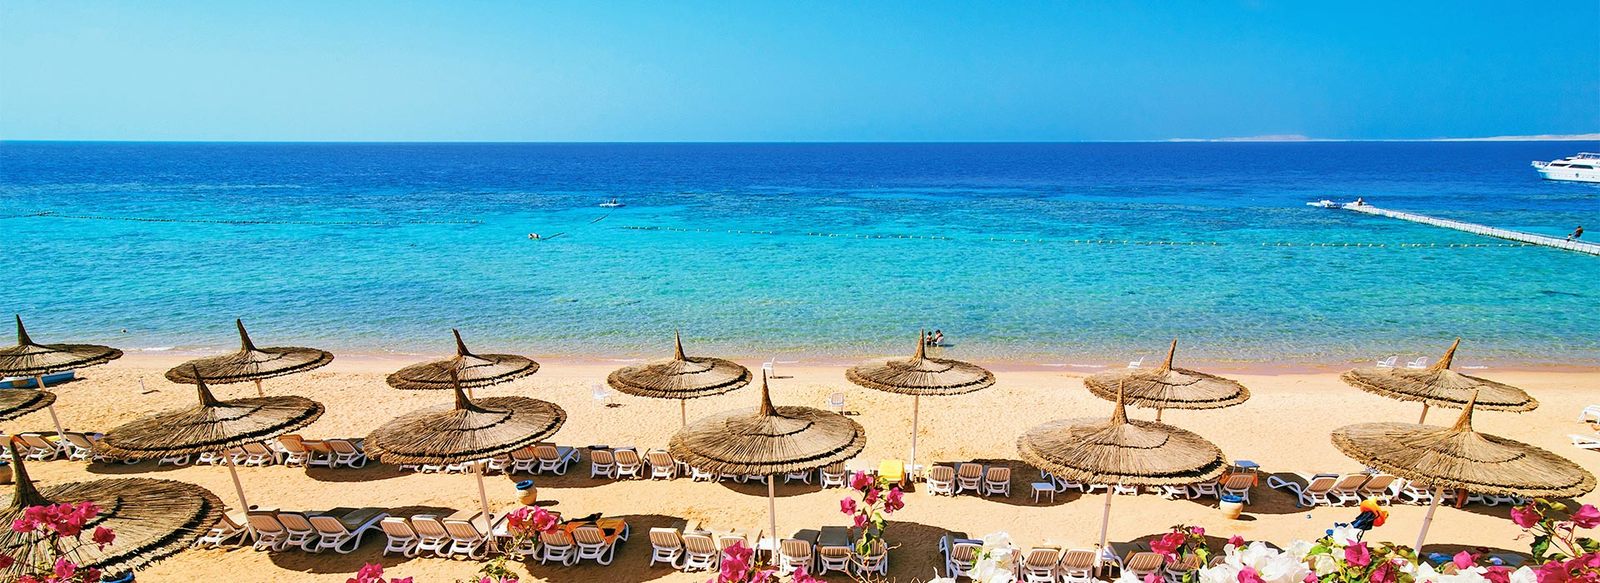 Miglior prezzo Veraclub Reef Oasis Beach Resort - Naama Bay - Sharm El  Sheikh